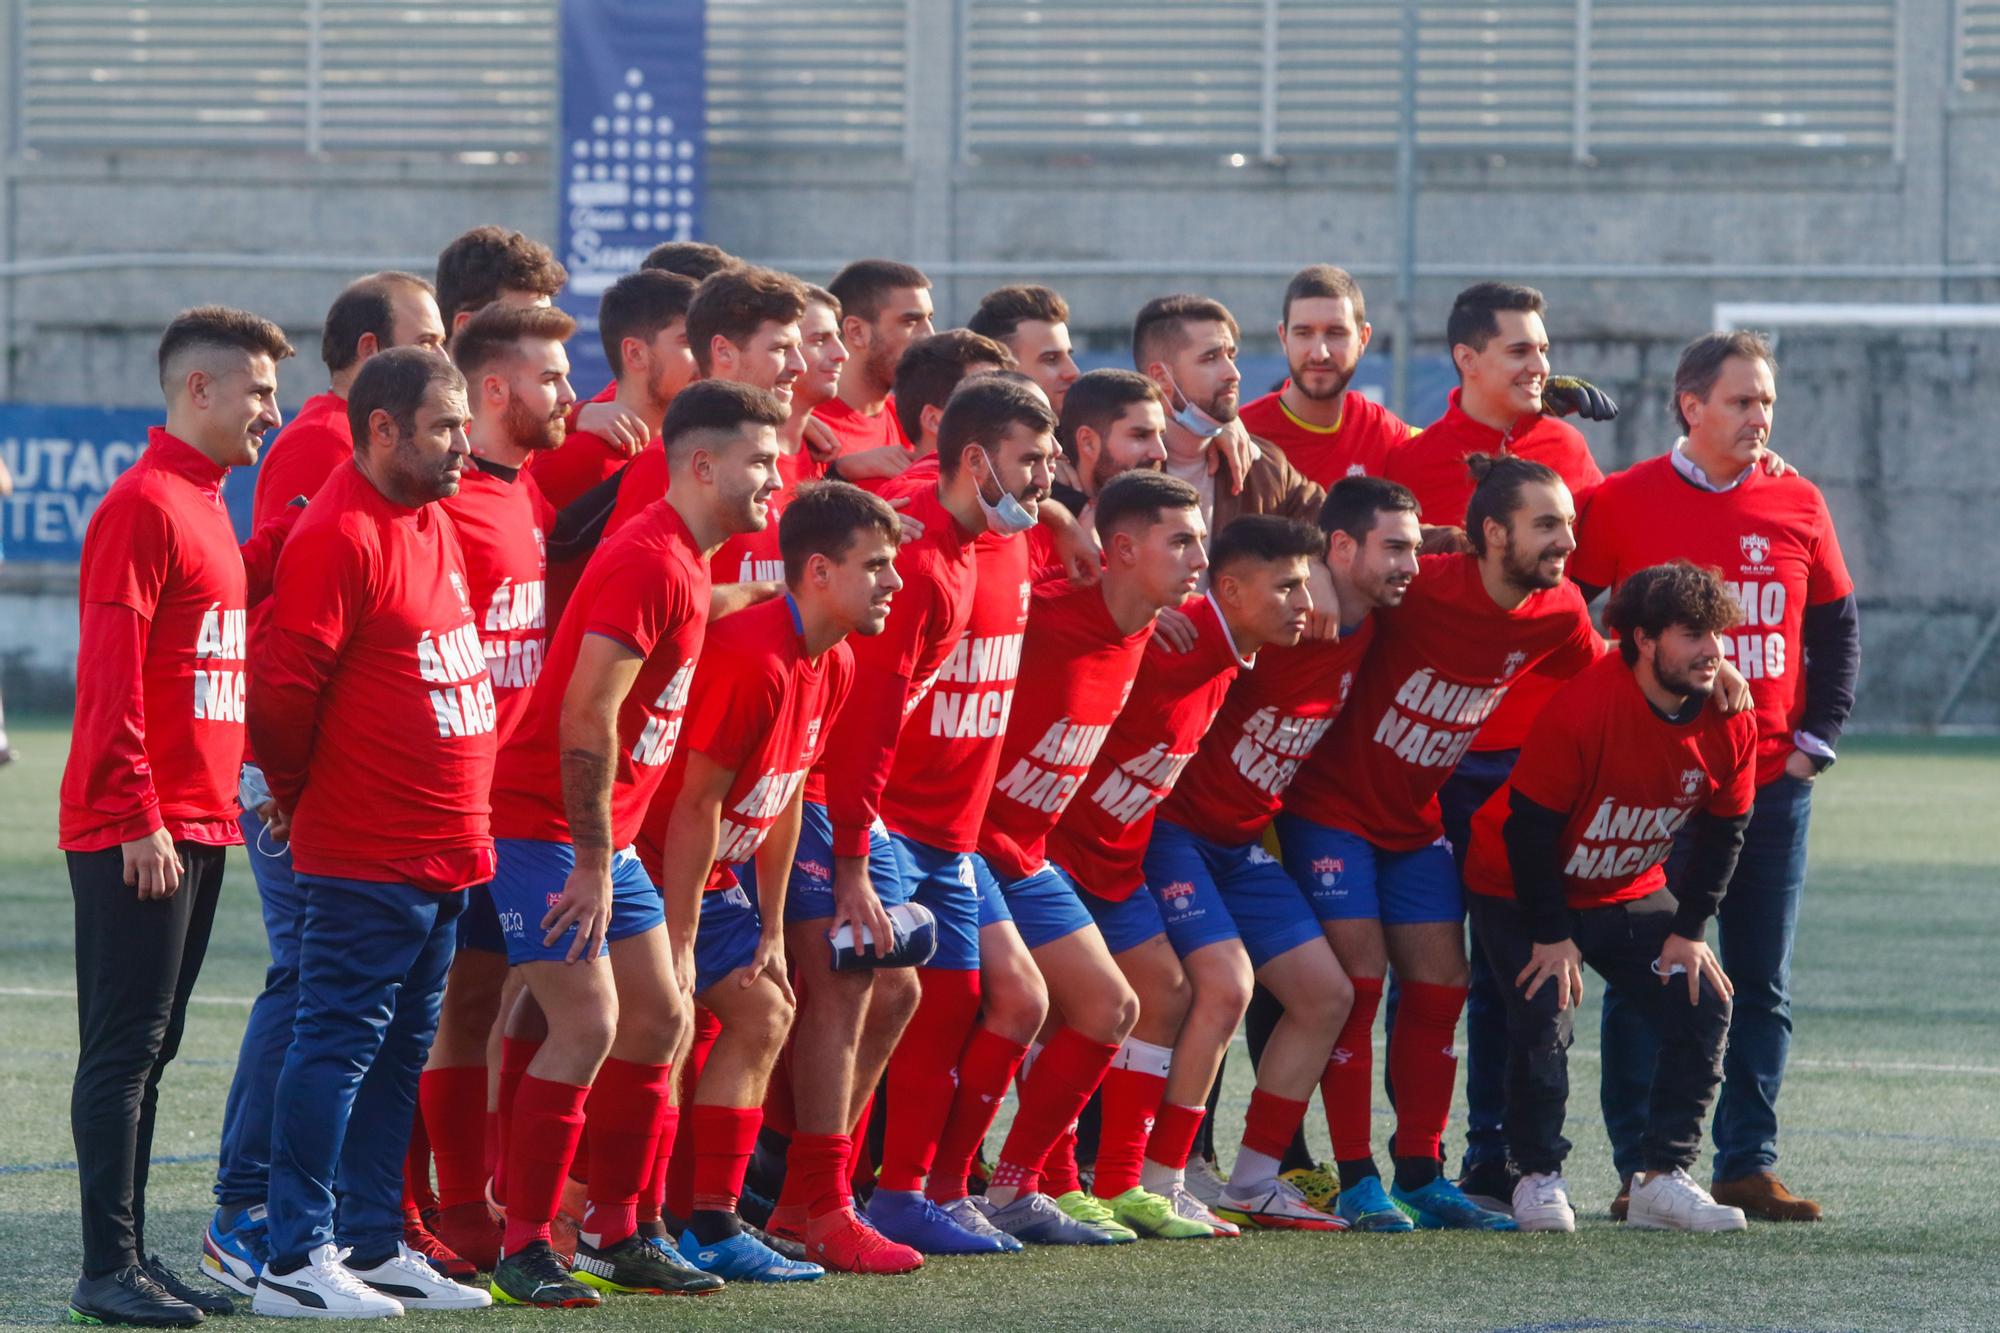 Las imágenes de la victoria del Umia sobre el Pontevedra B en A Bouza (3-0)